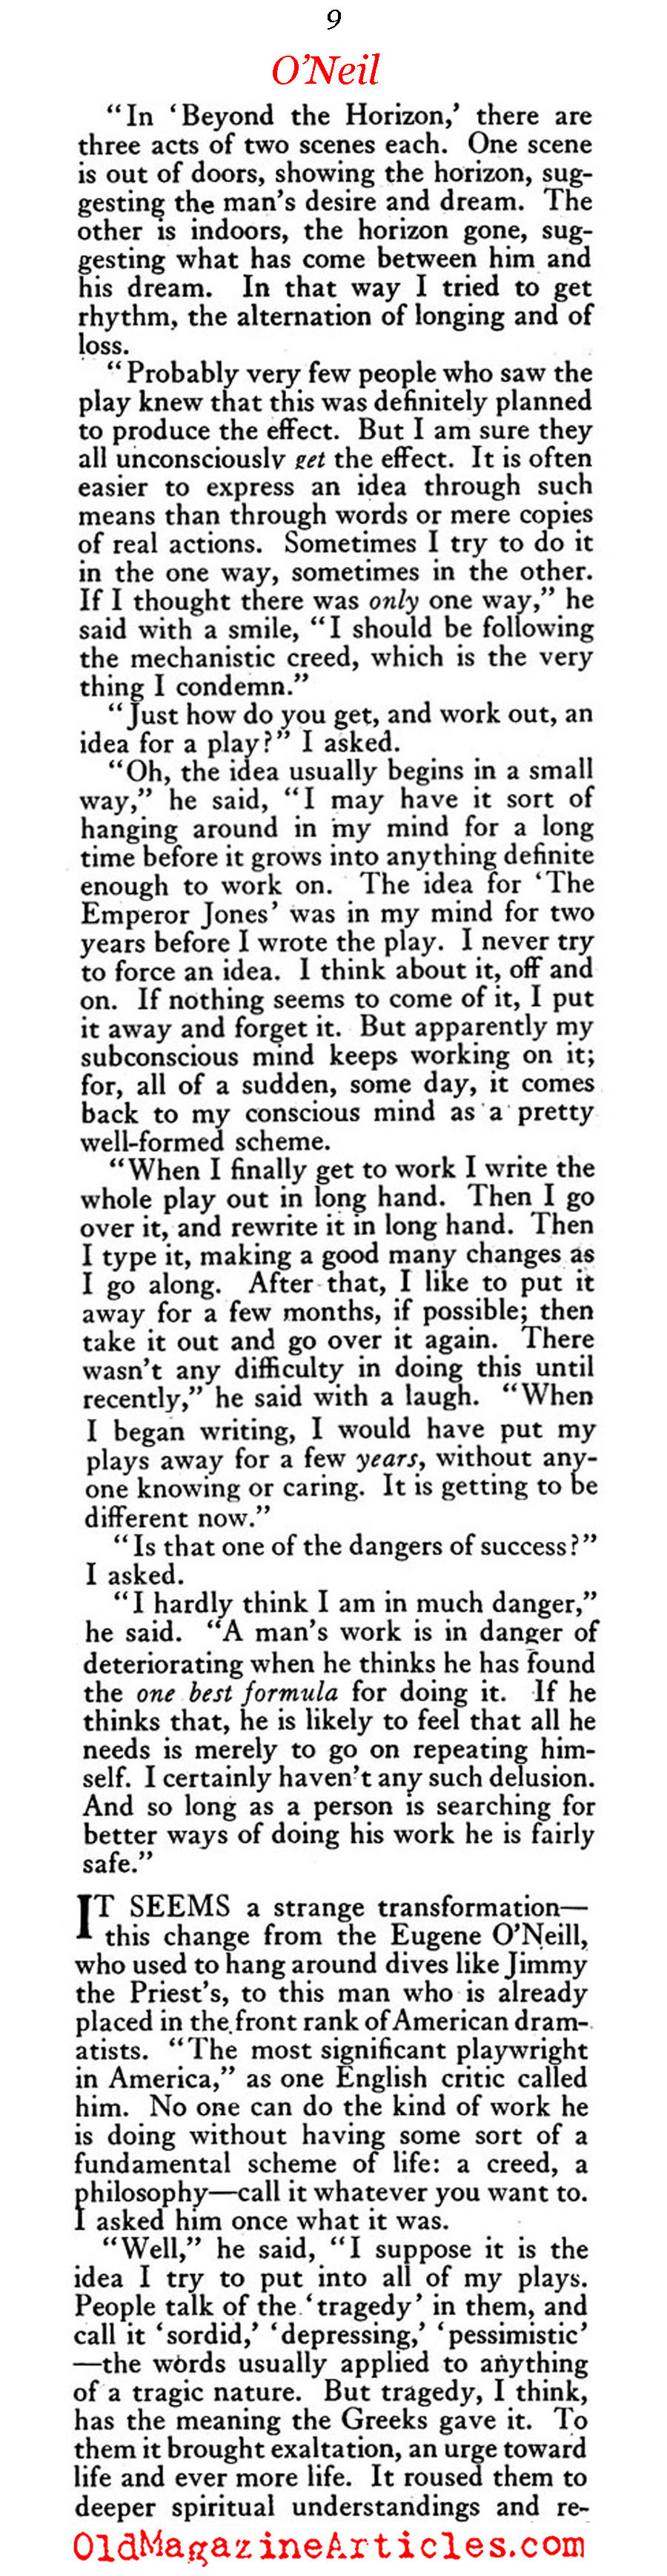 The Extraordinary Story of Eugene O'Neill (The American Magazine, 1922)